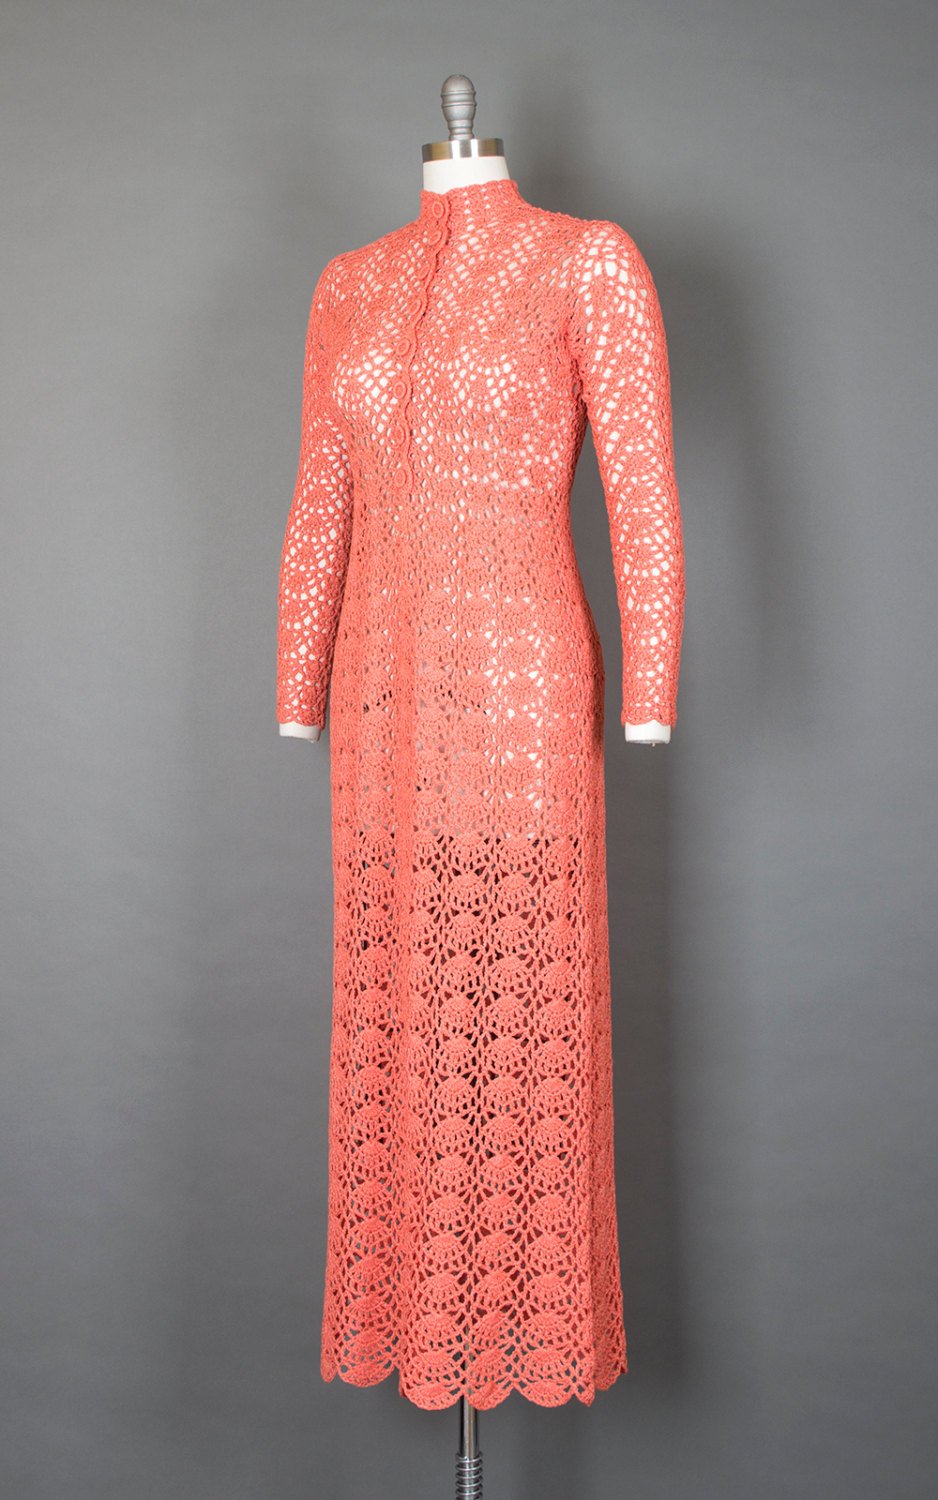 Vintage 1970s Sweater Dress | 70s Crochet Peach See Through Sheer Boho Maxi Wedding Dress (small/medium)